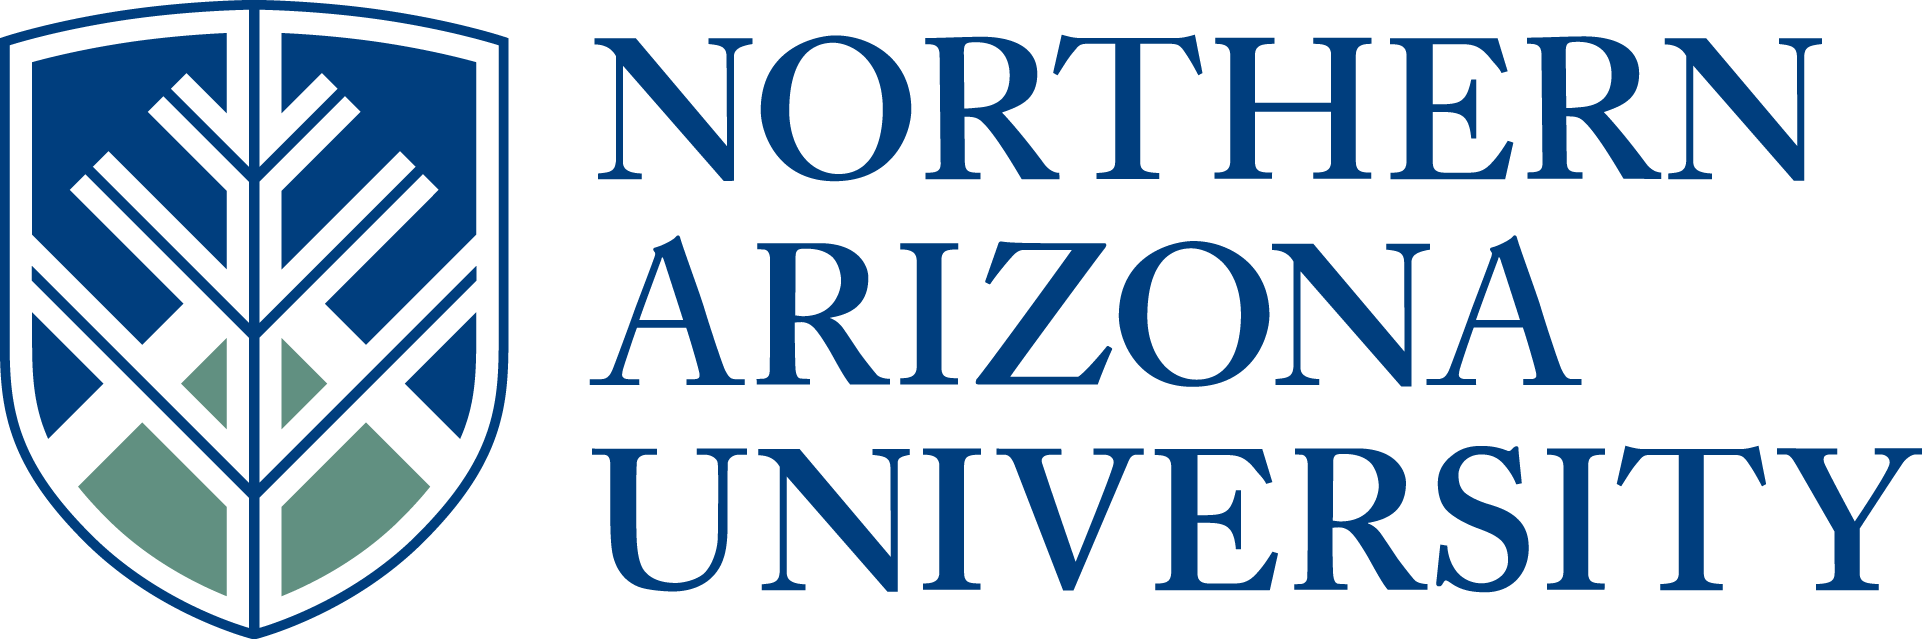 Northern Arizona Logo - University Of North Arizona (1922x639)